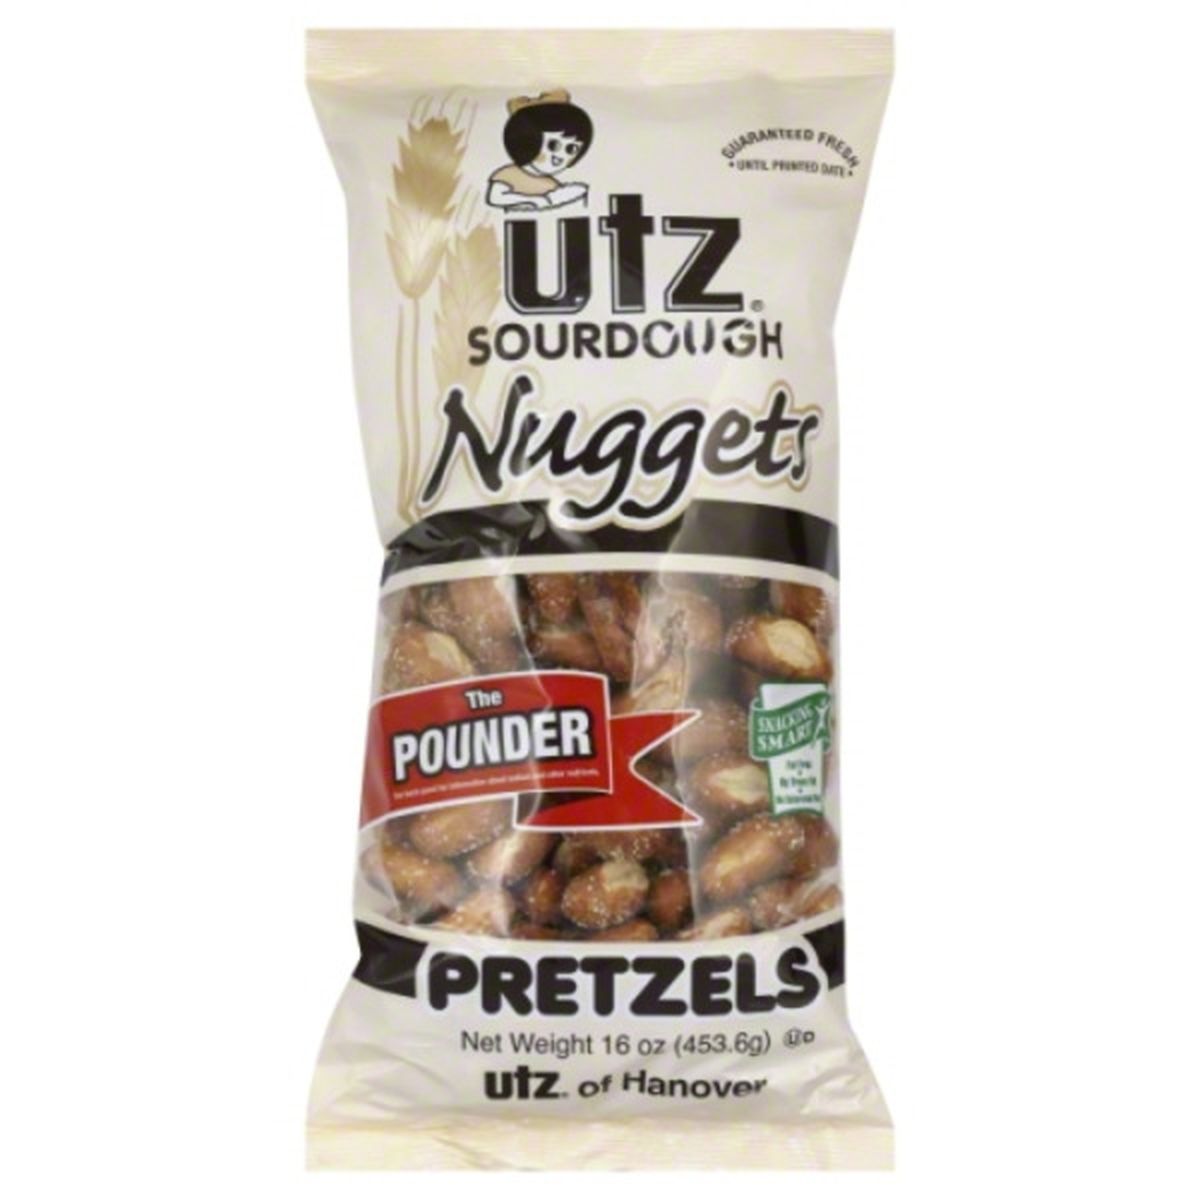 Calories in Utz Snacking Smart Pretzels, Sourdough, Nuggets